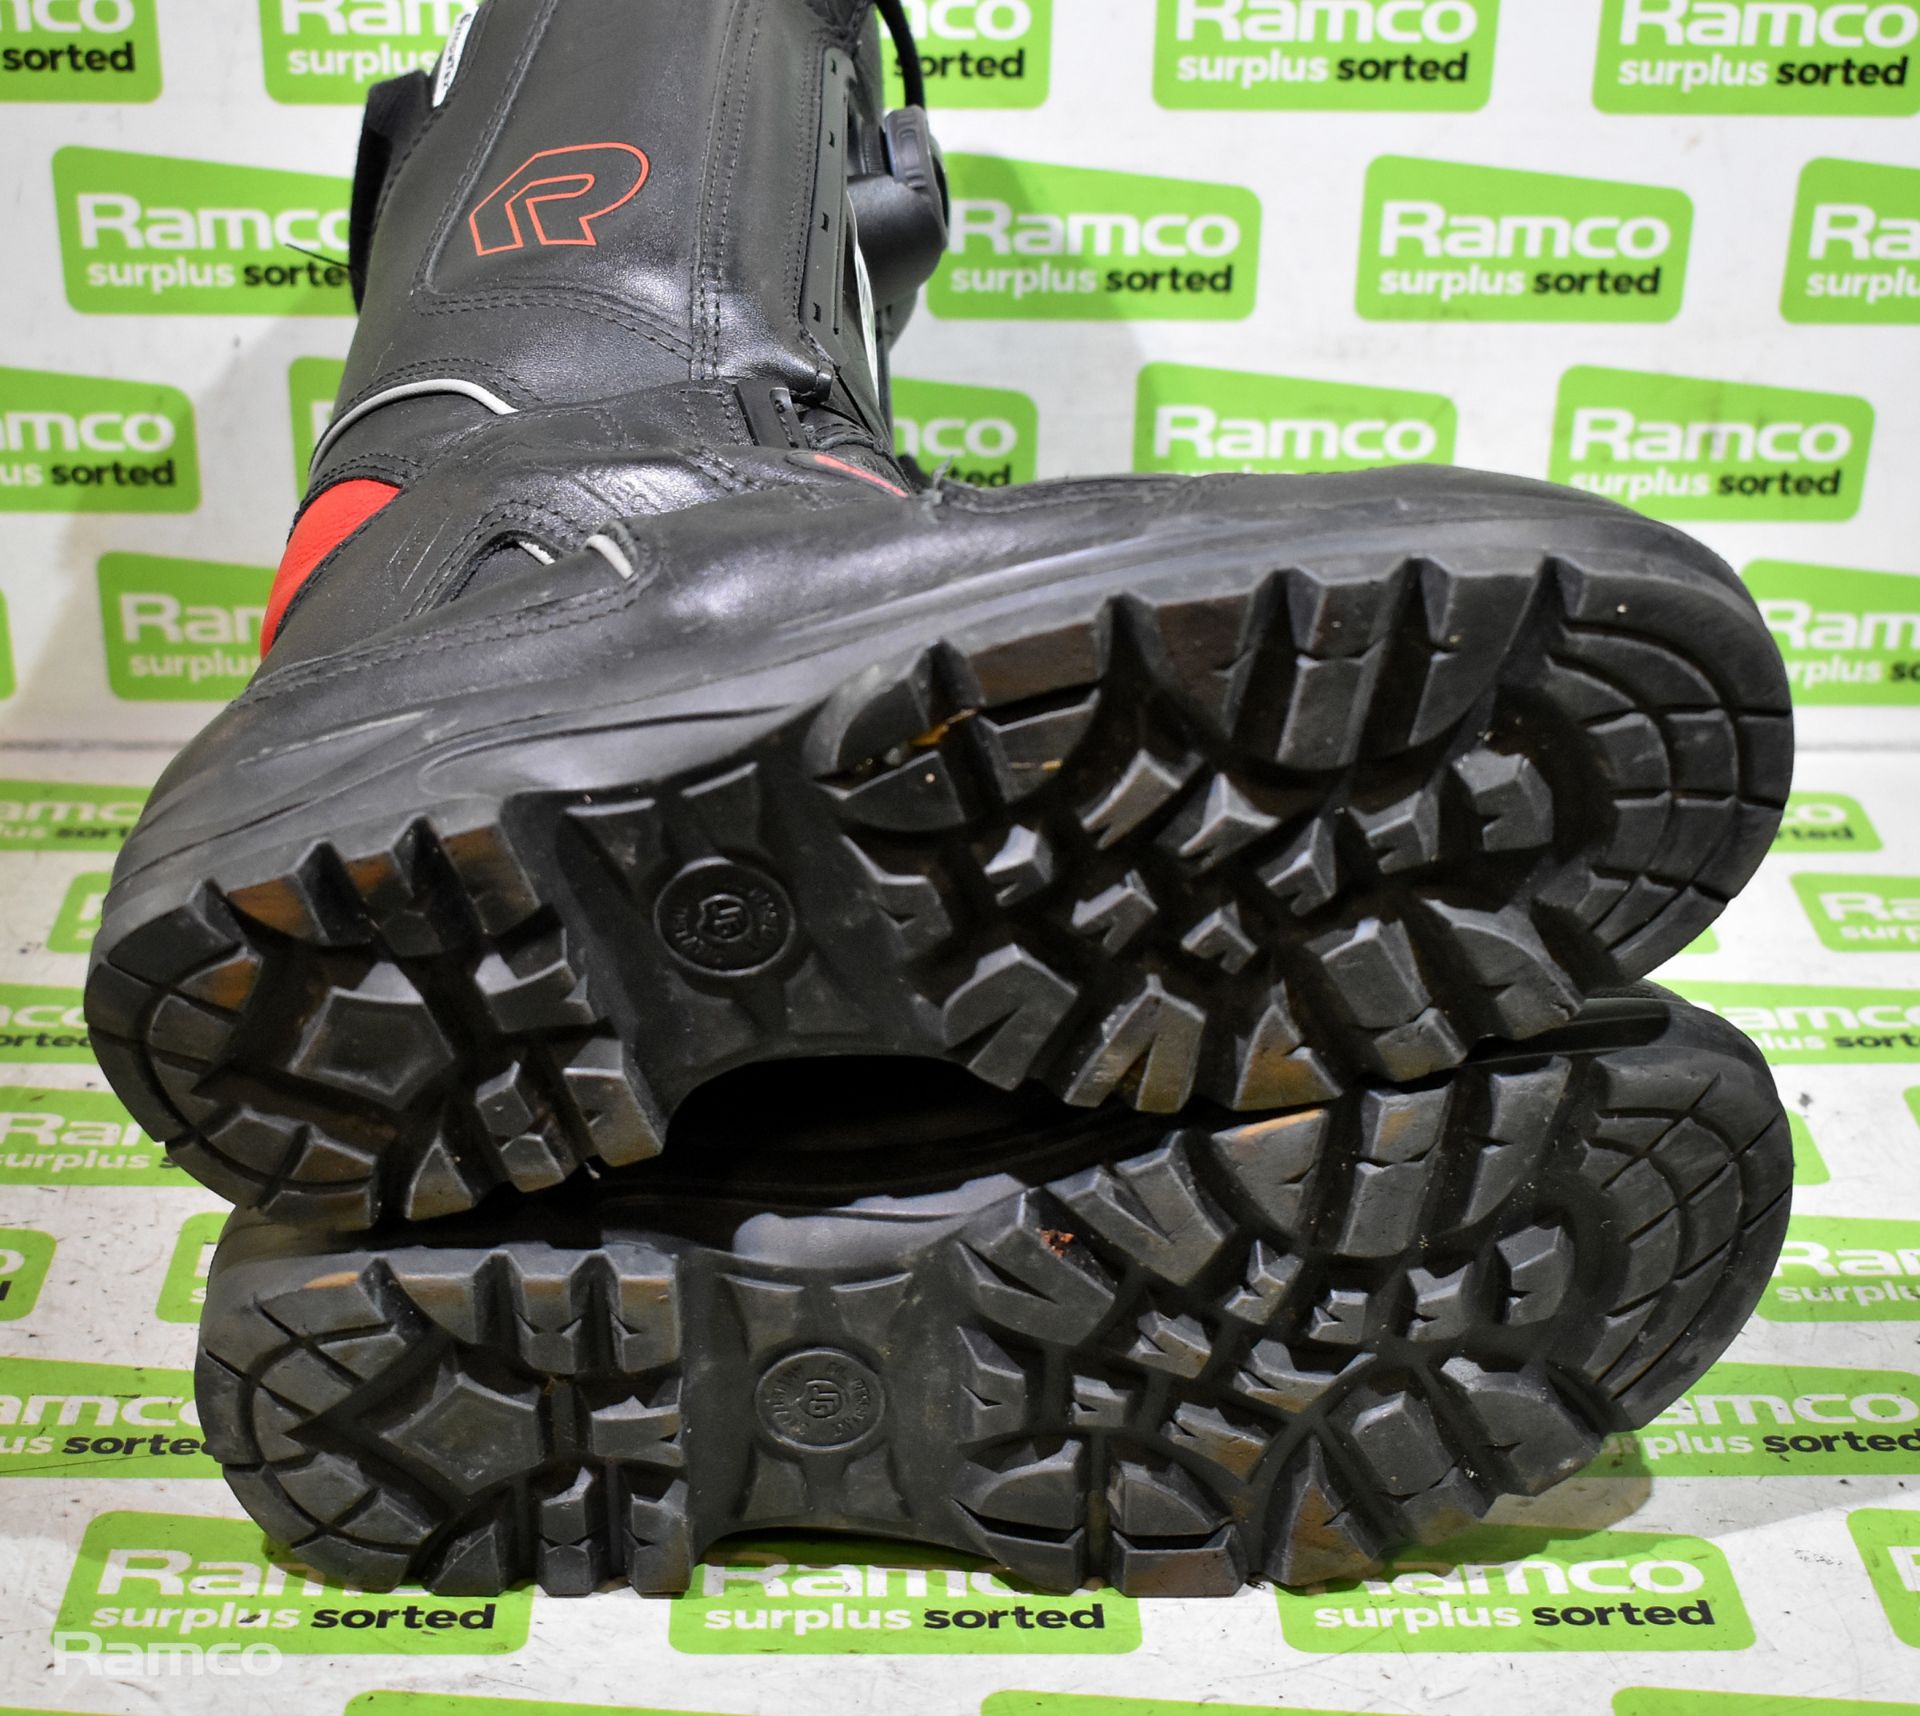 Rosenbauer Sympatex Fire & Heat Resistant Boots Pair - Size: EU 34, UK 9 - Image 4 of 4